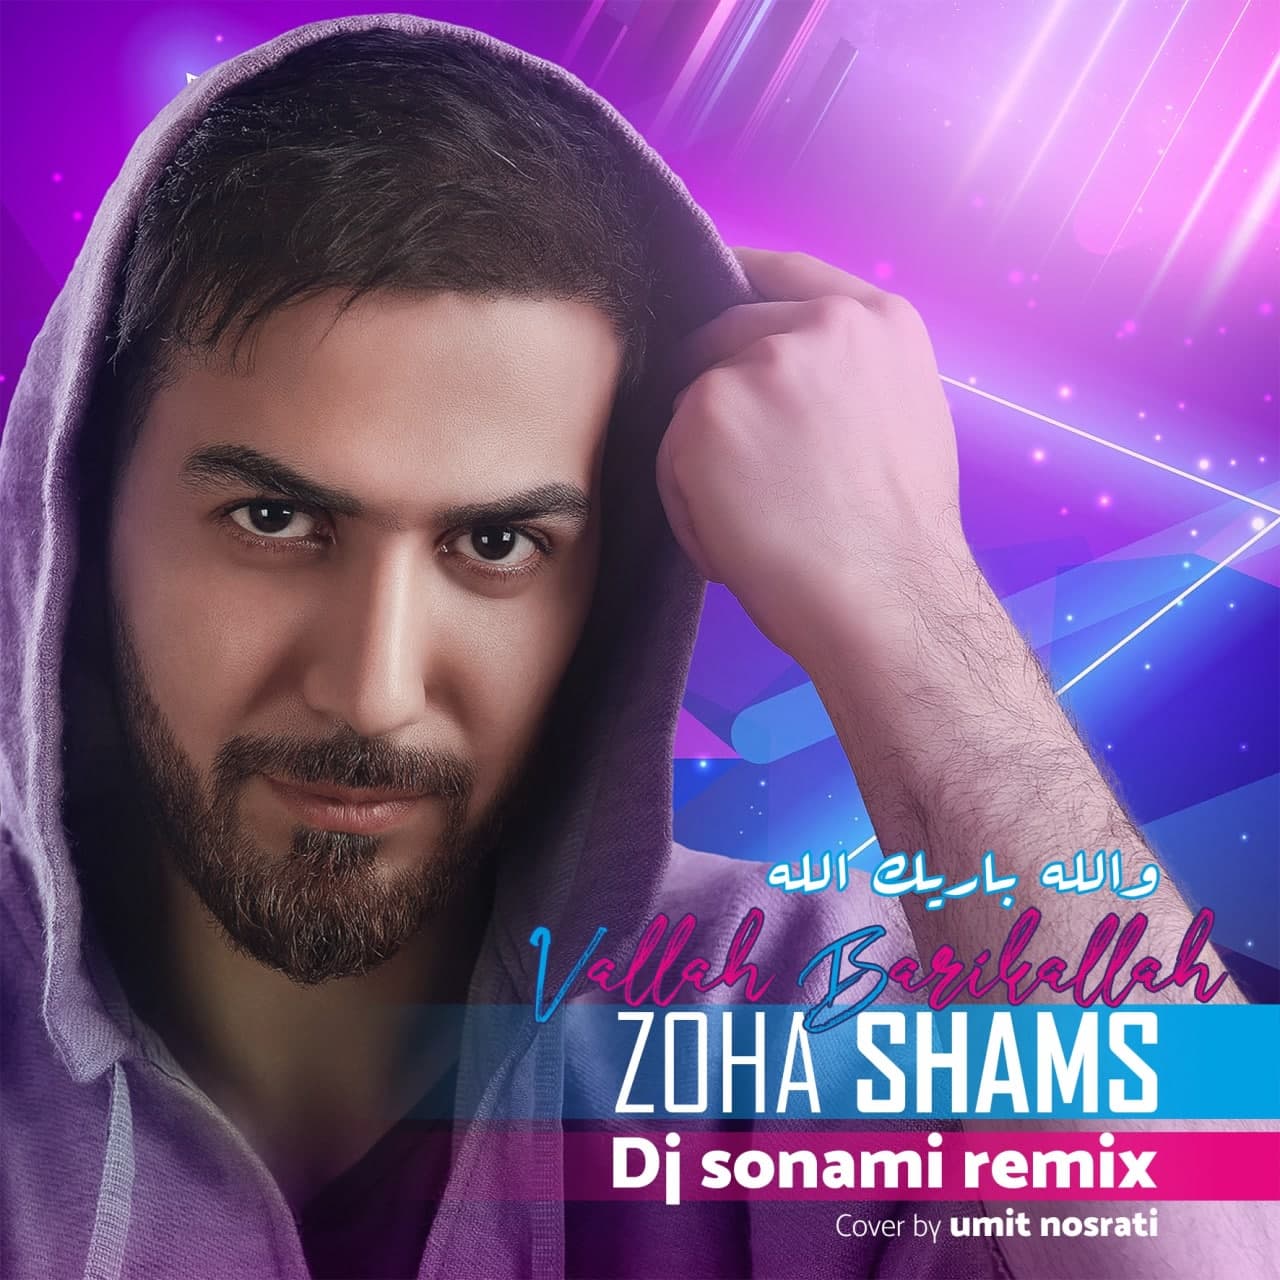 Zoha Shams – Vala Barikala (Remix)